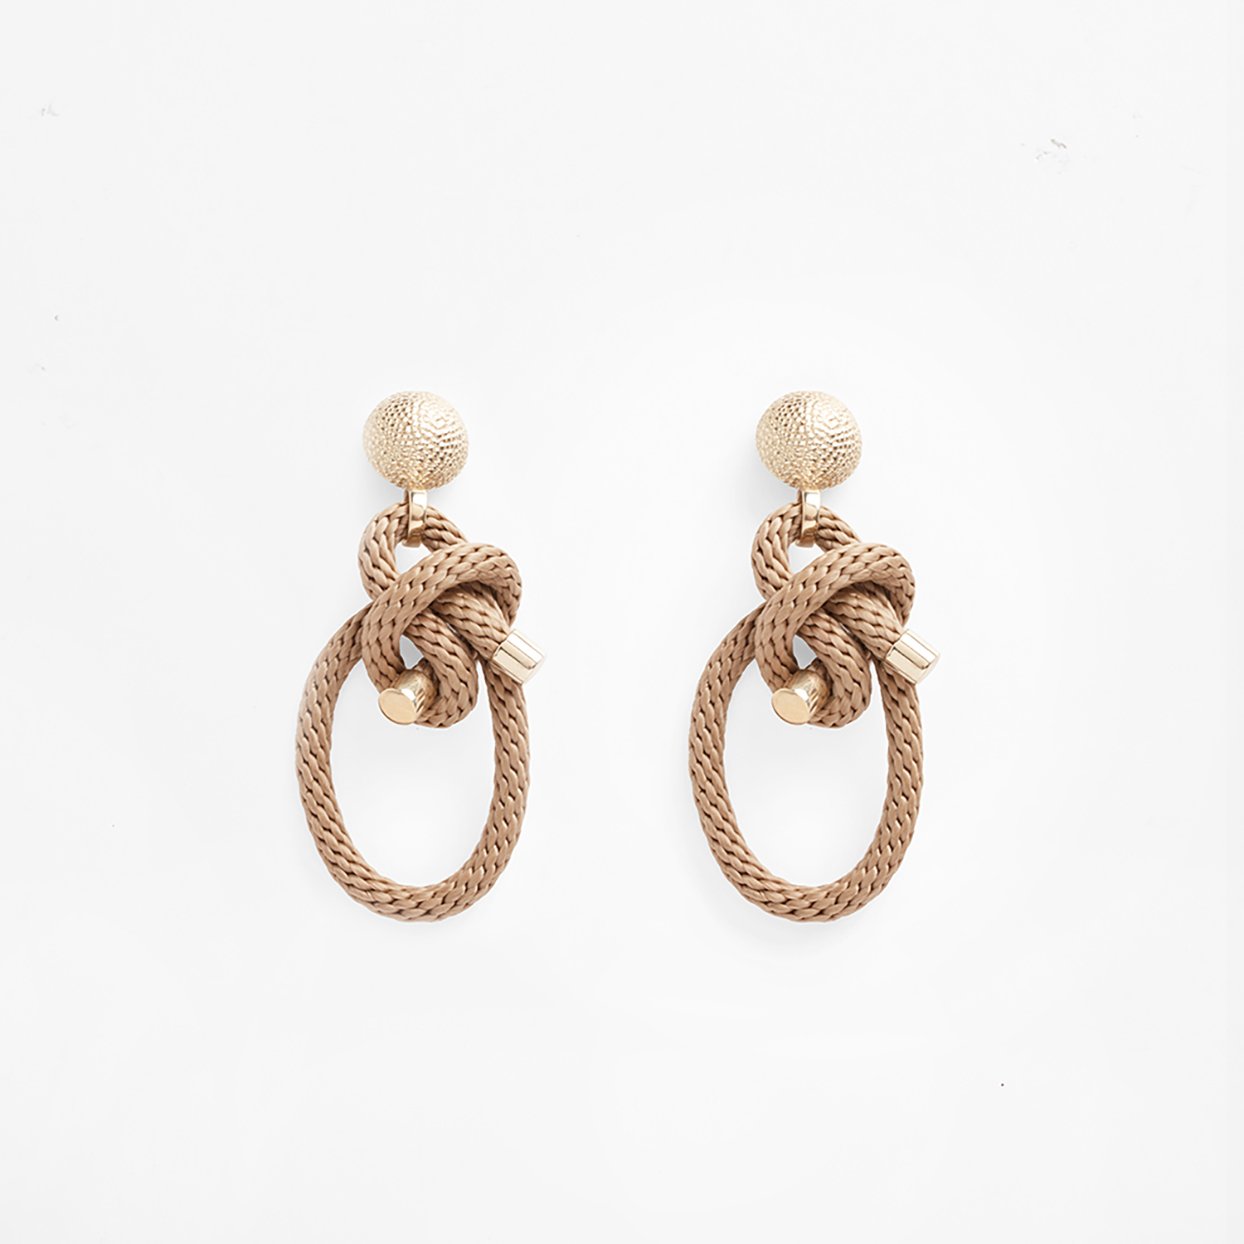 Rope earrings -Shimenawa 